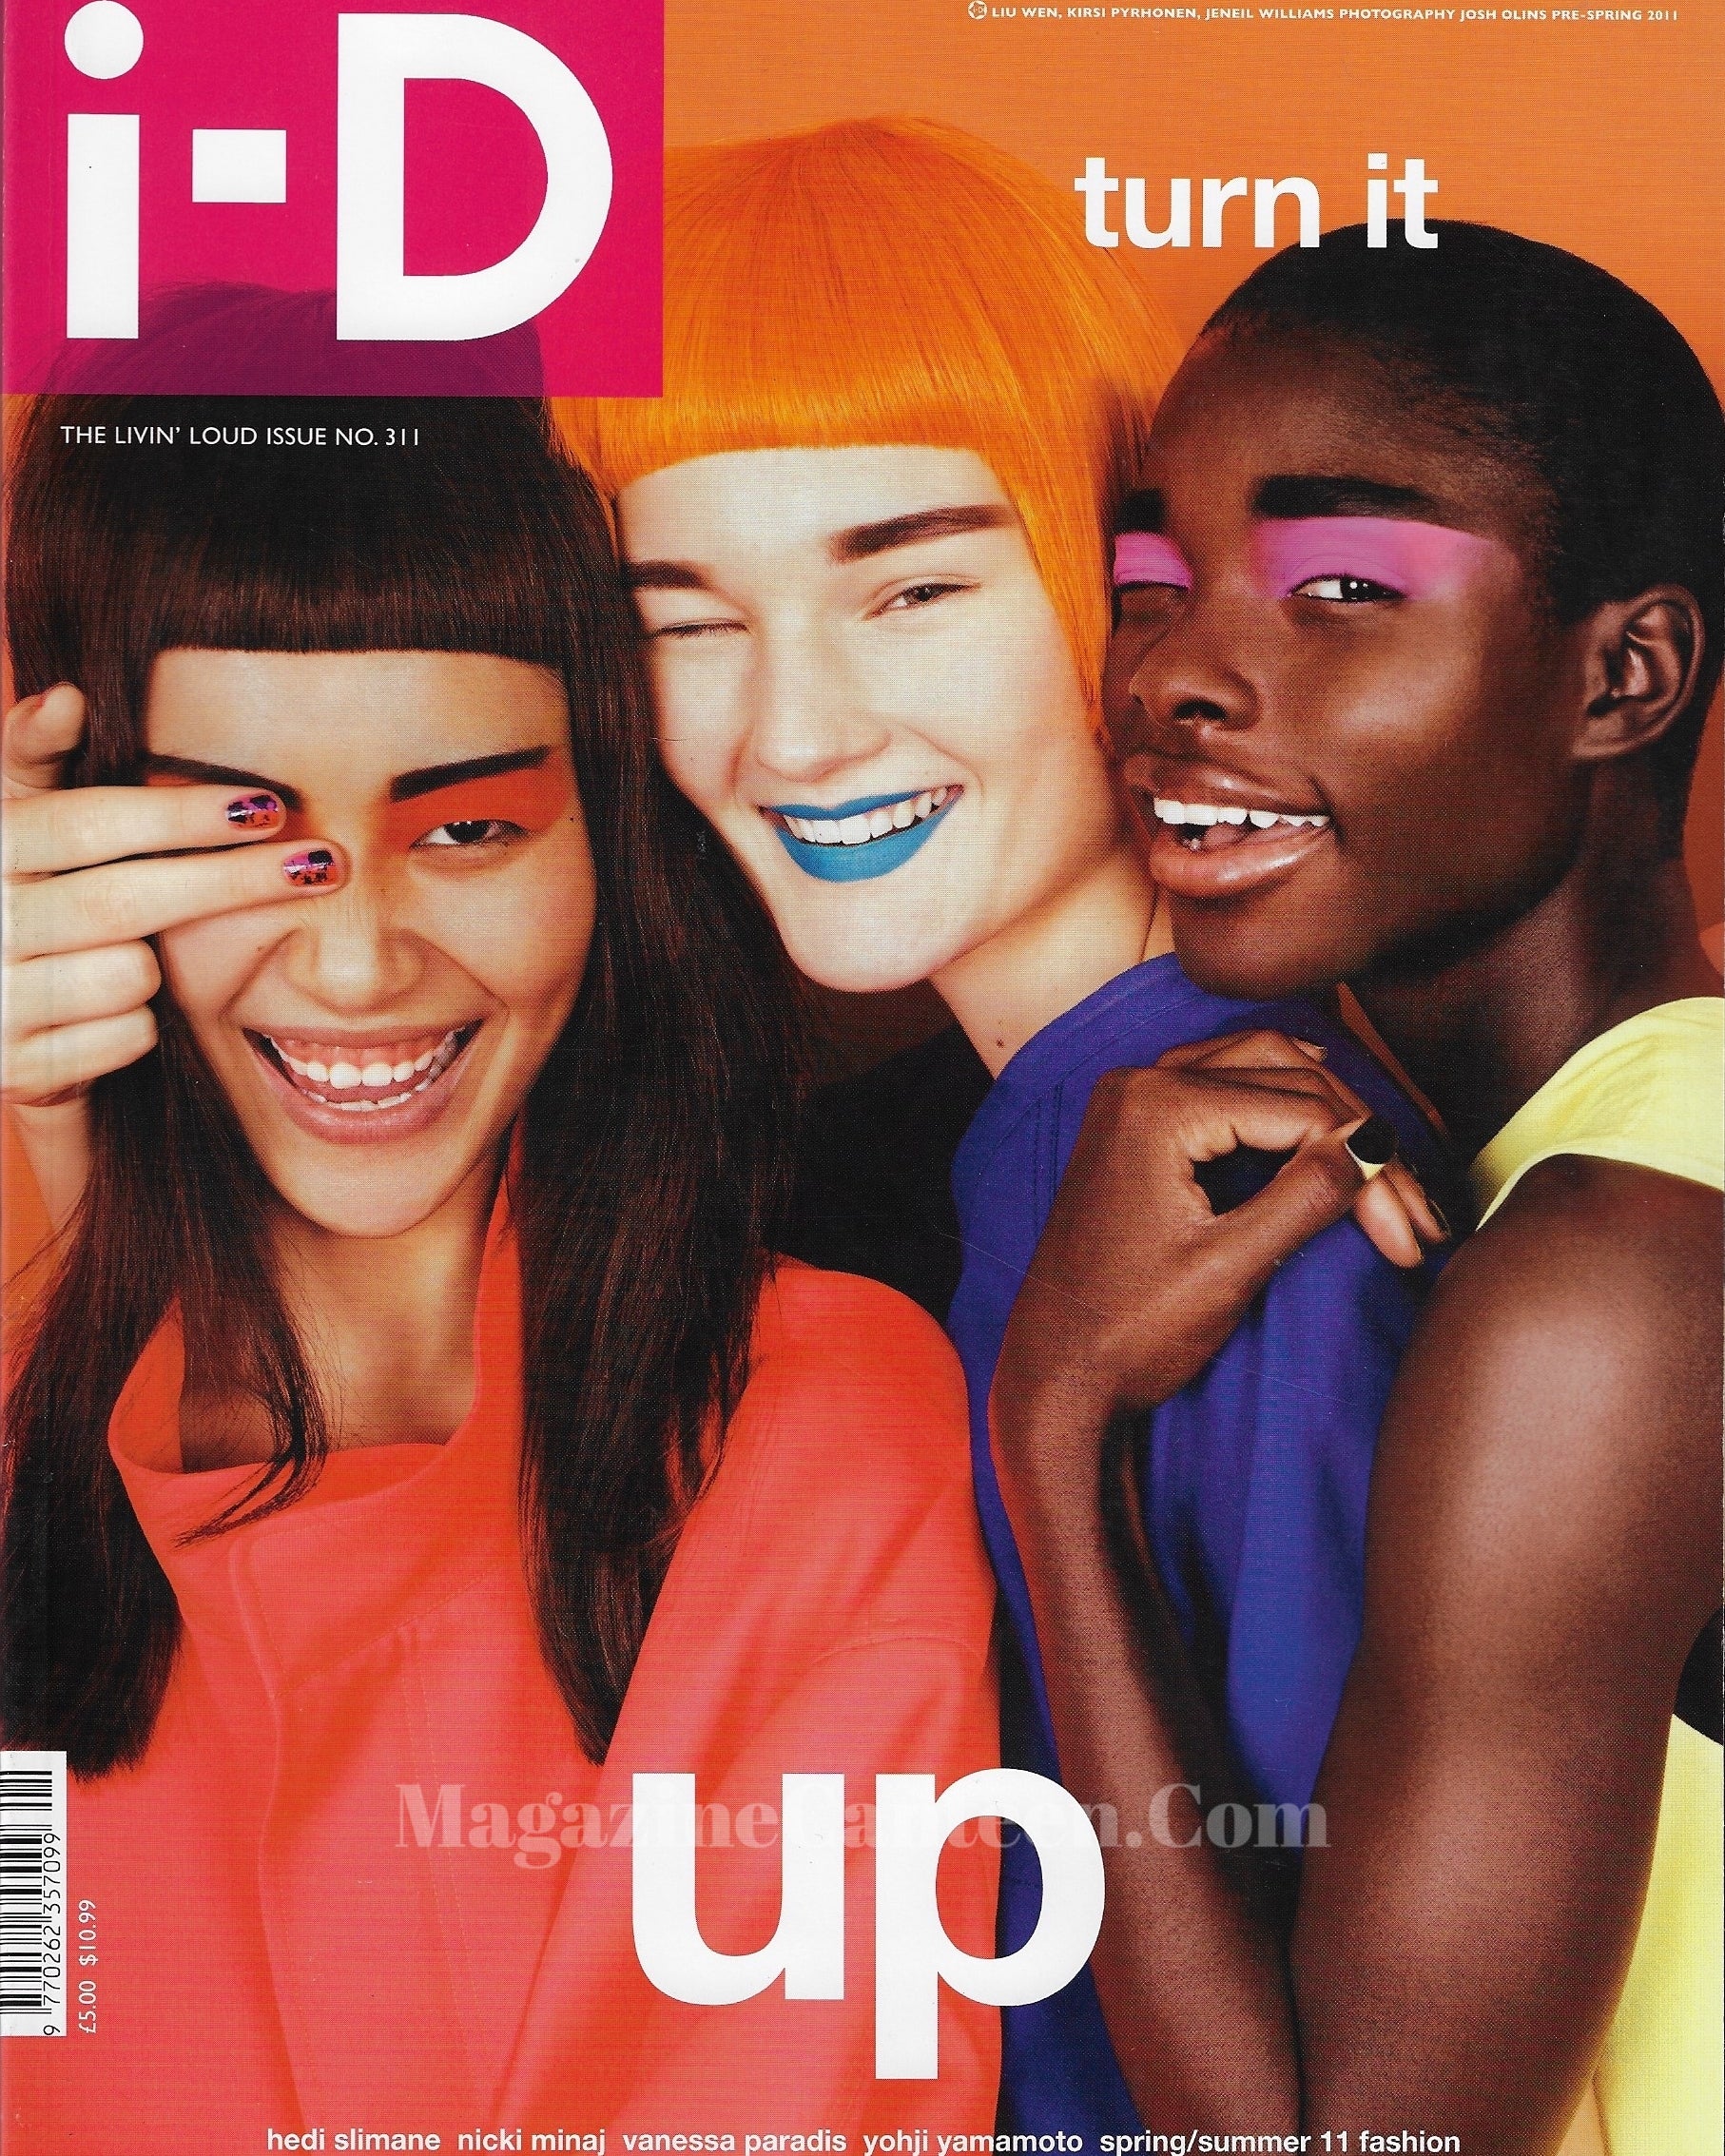 I-D Magazine 311 - Liu Kirsi & Jeniel 2011